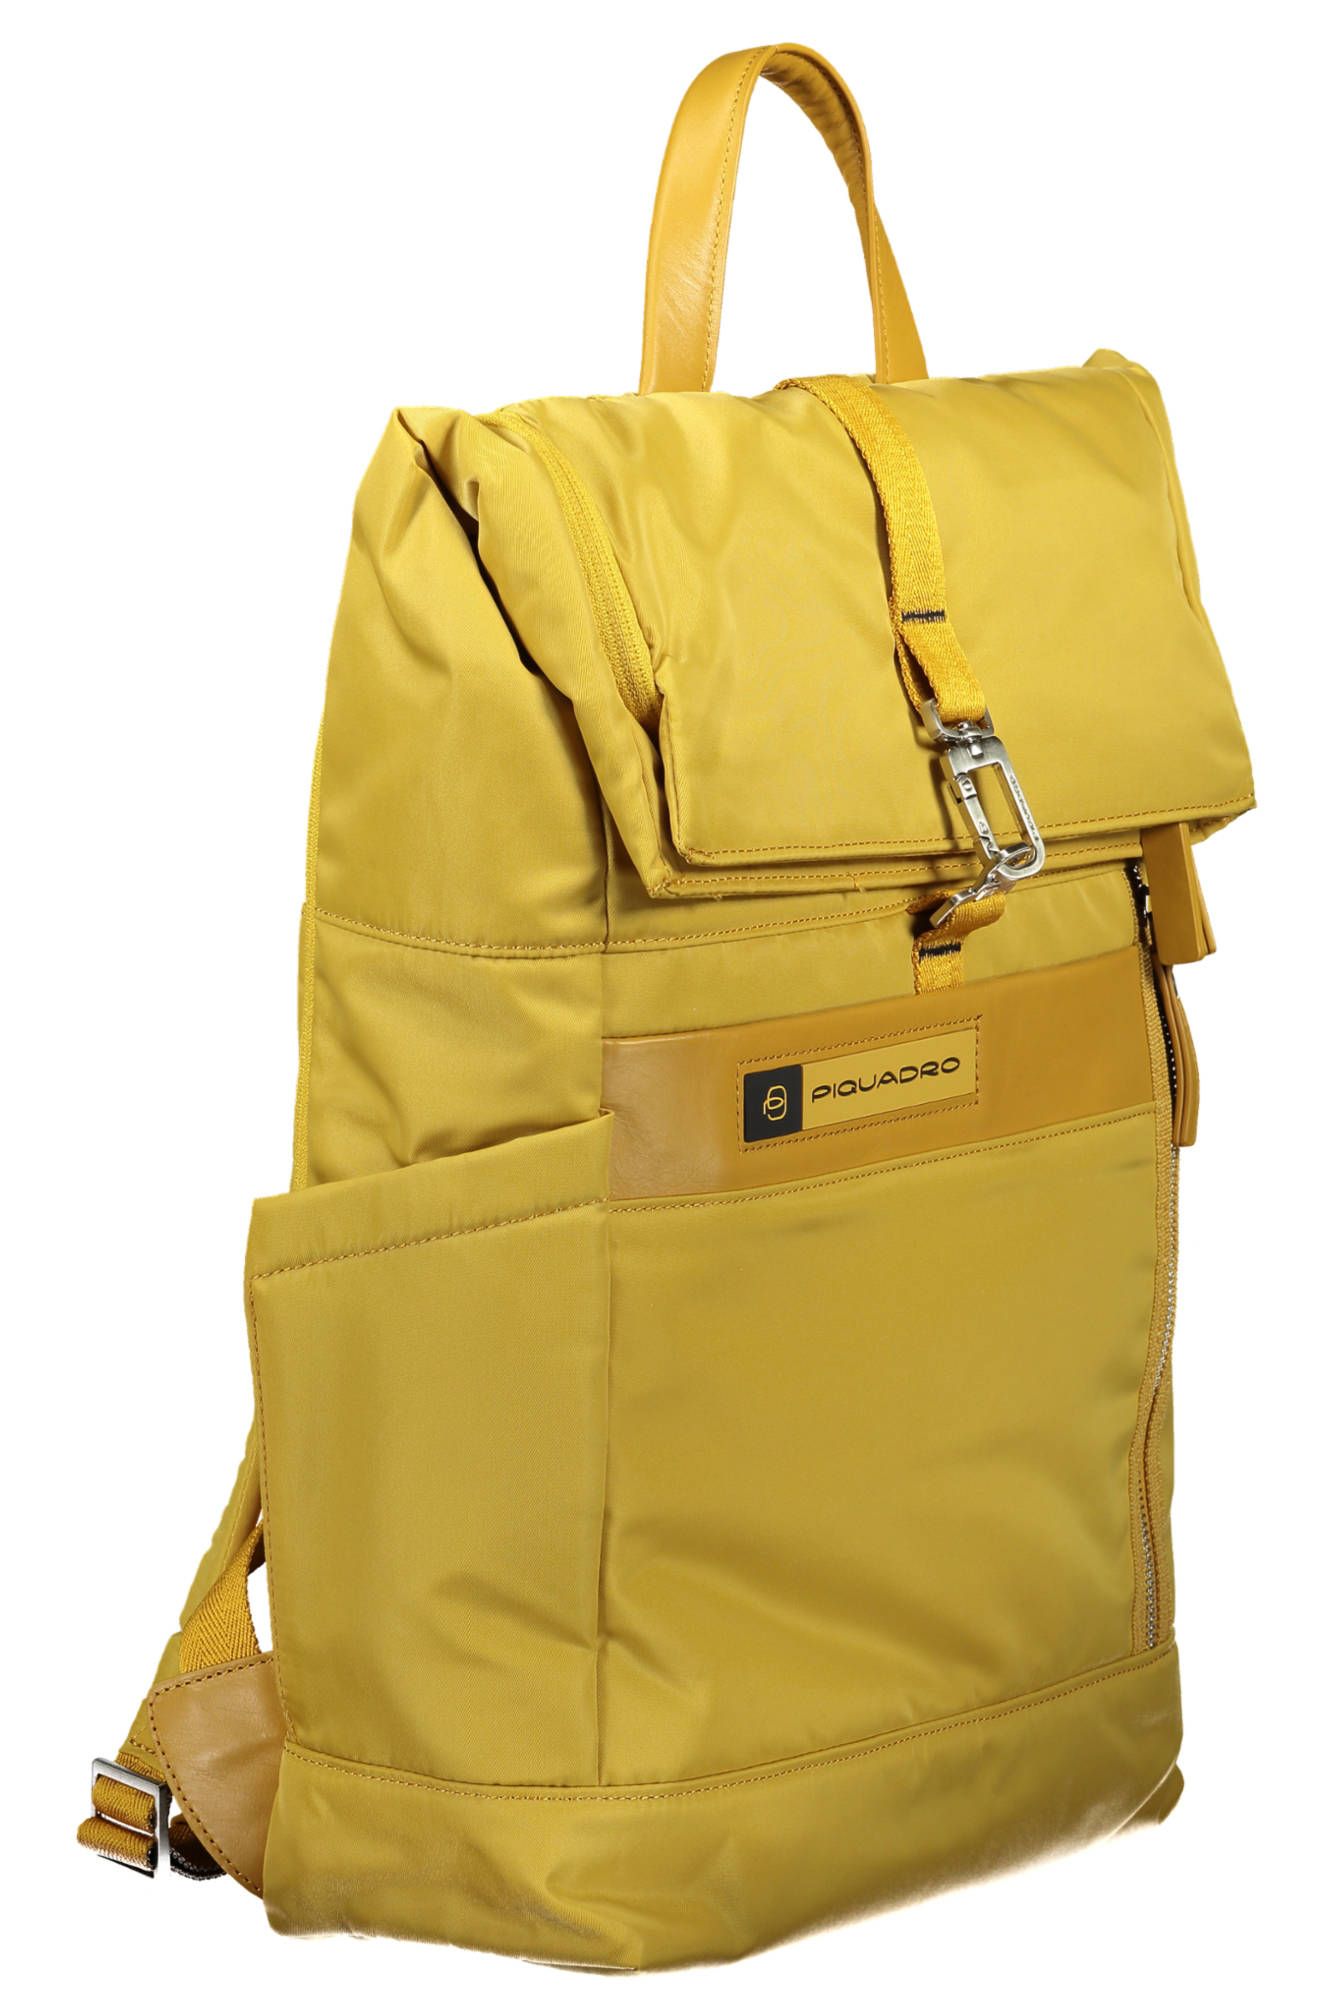 Sleek Yellow Urban Backpack with Recycled Nylon